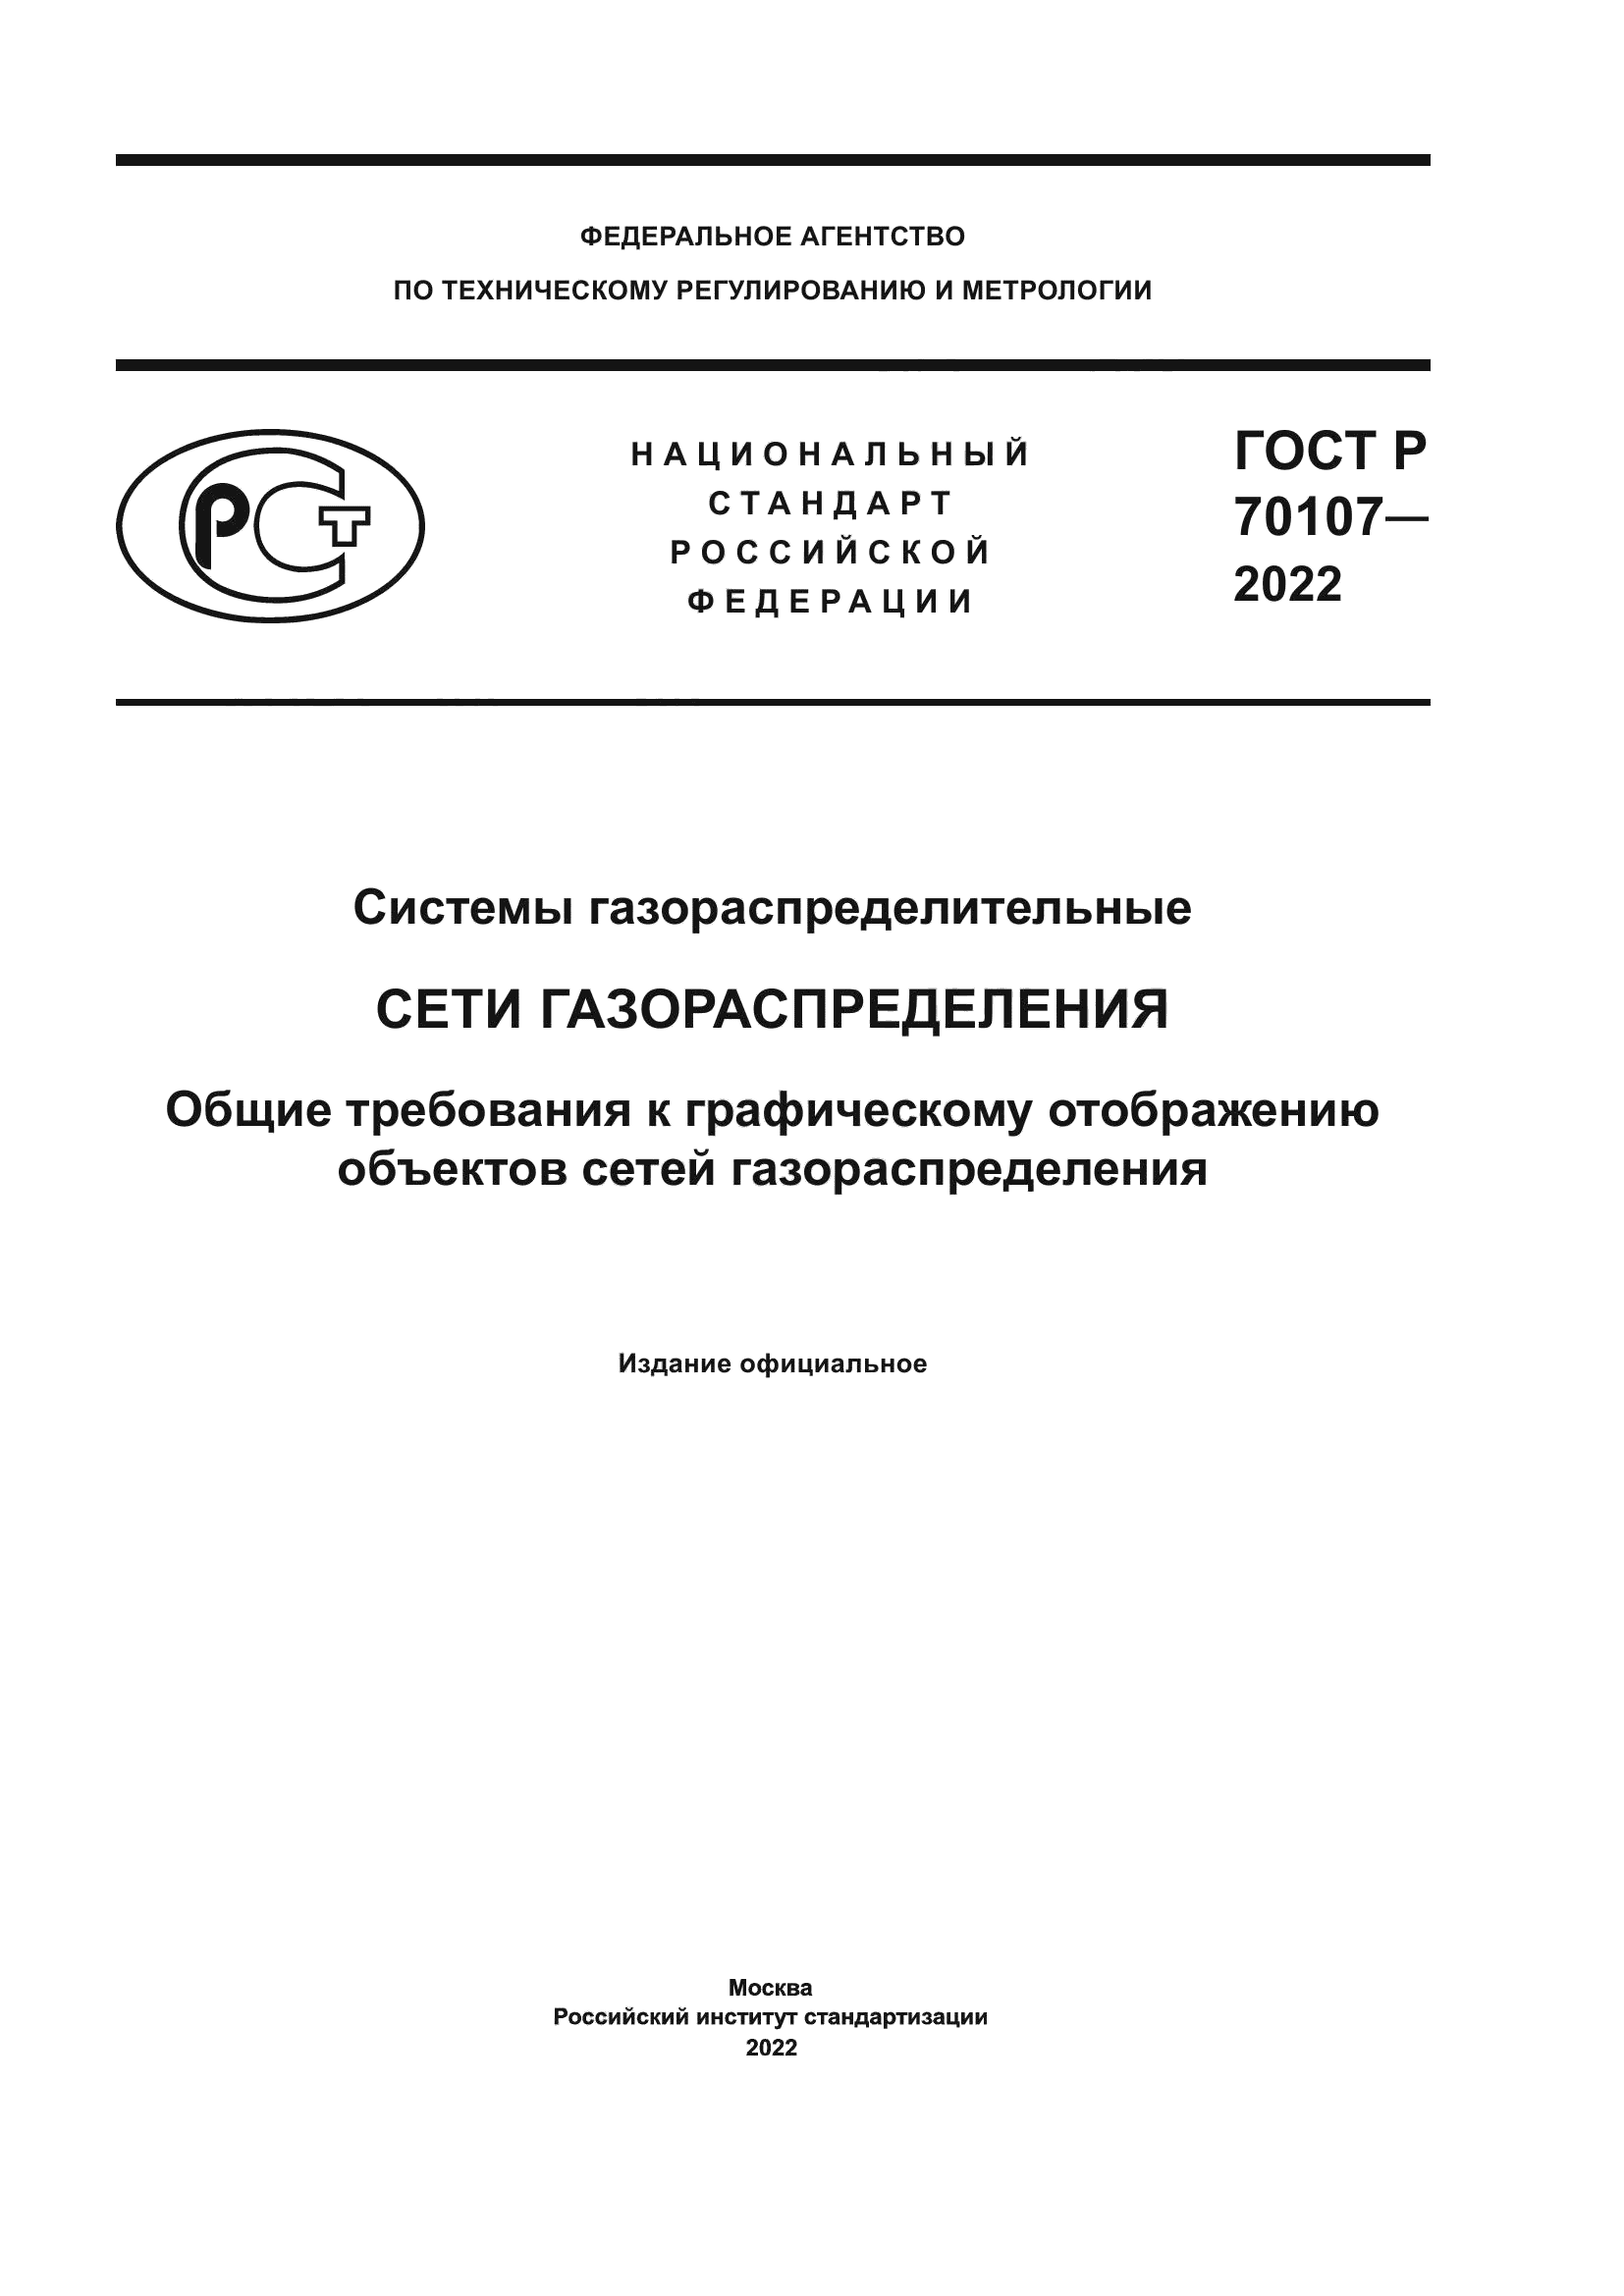 ГОСТ Р 70107-2022